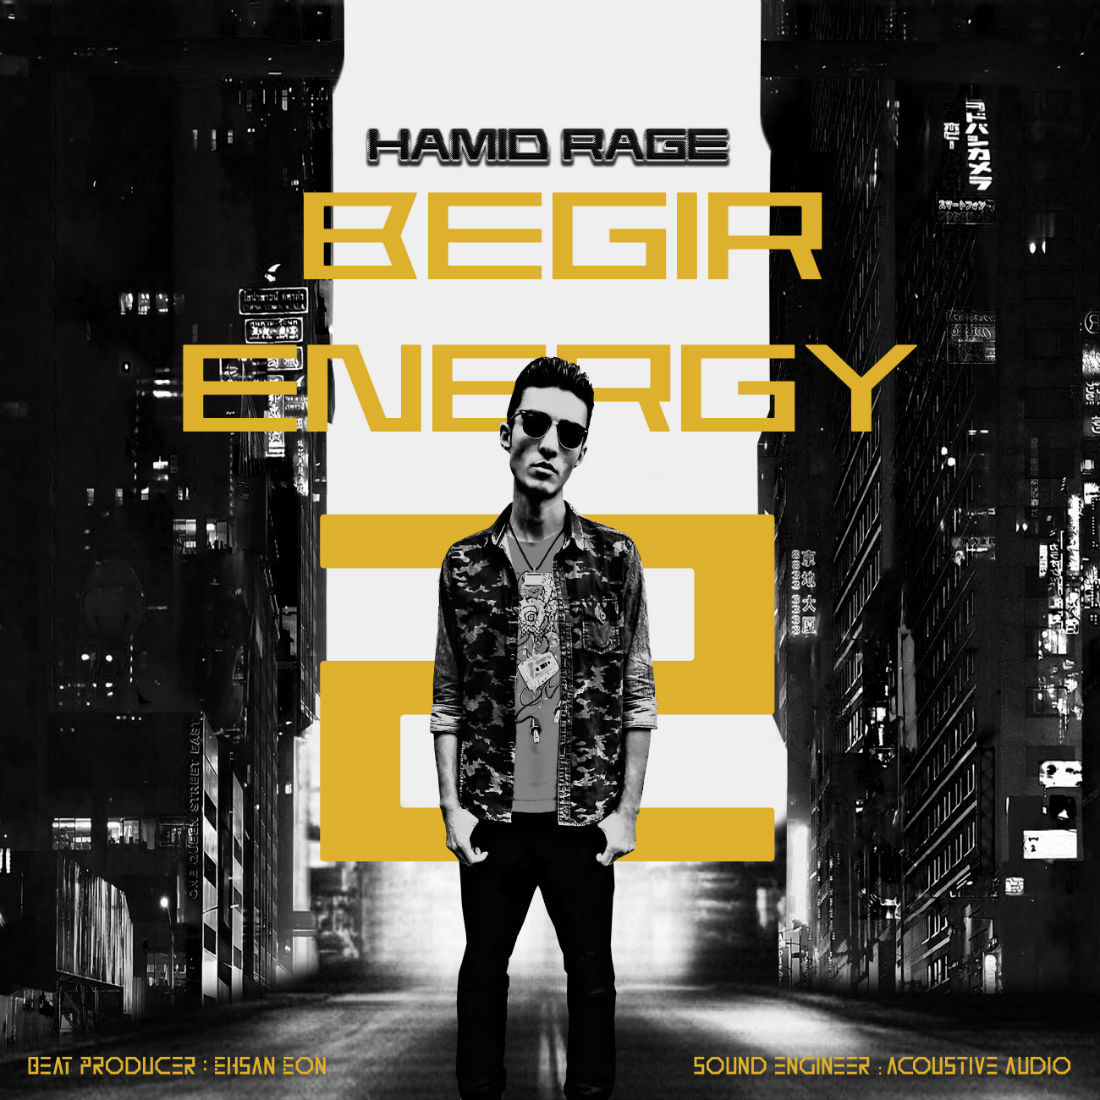 Hamid Rage - Begir Energy 2